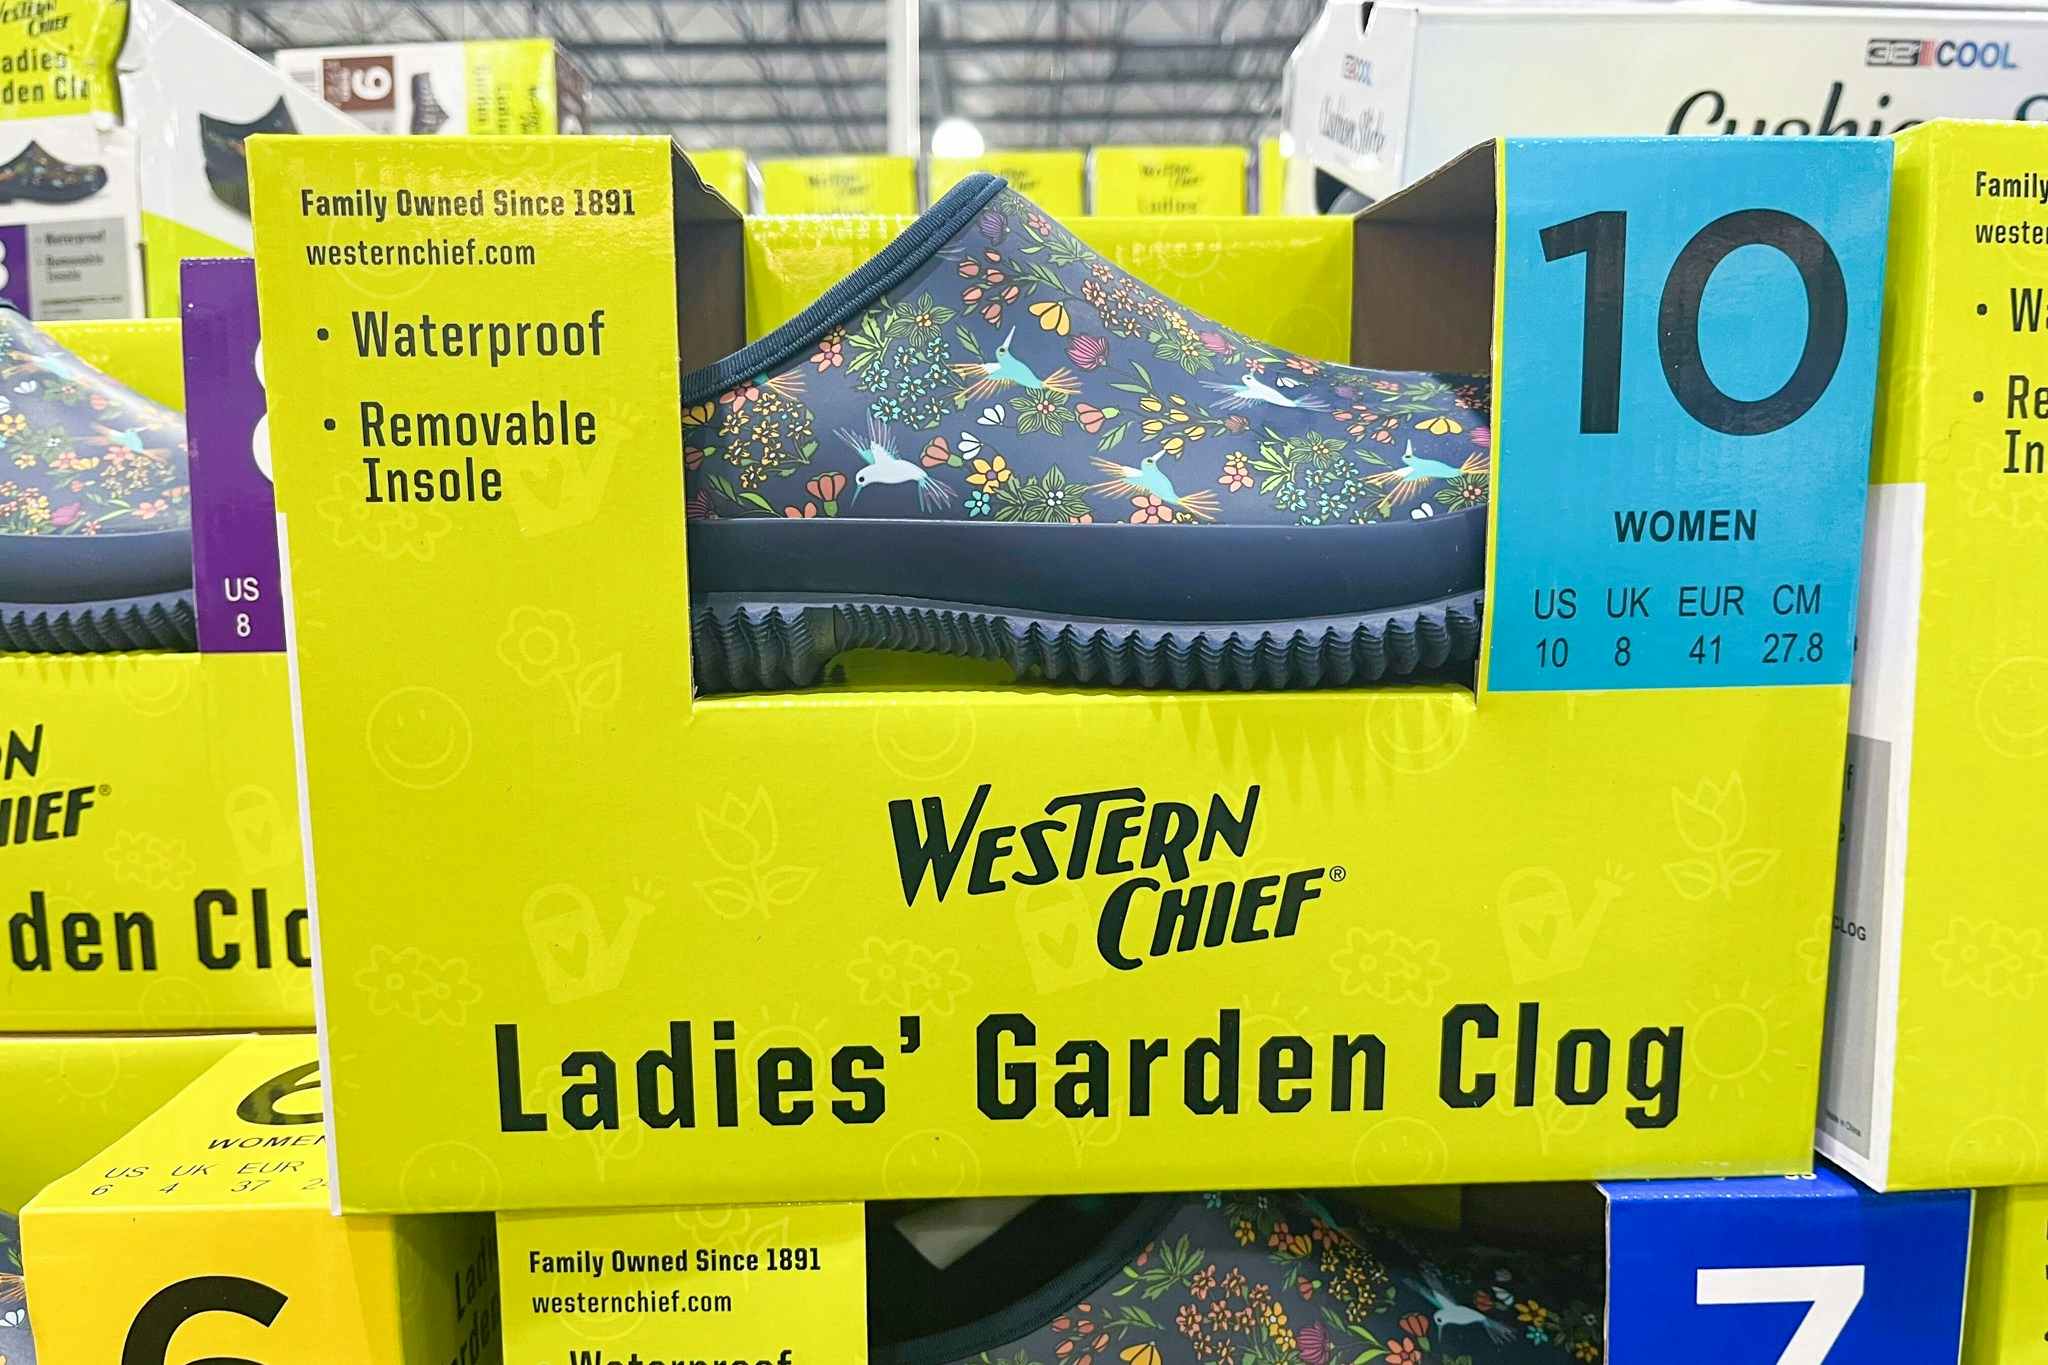 Western Chief Garden Clog, Just $18.99 at Costco